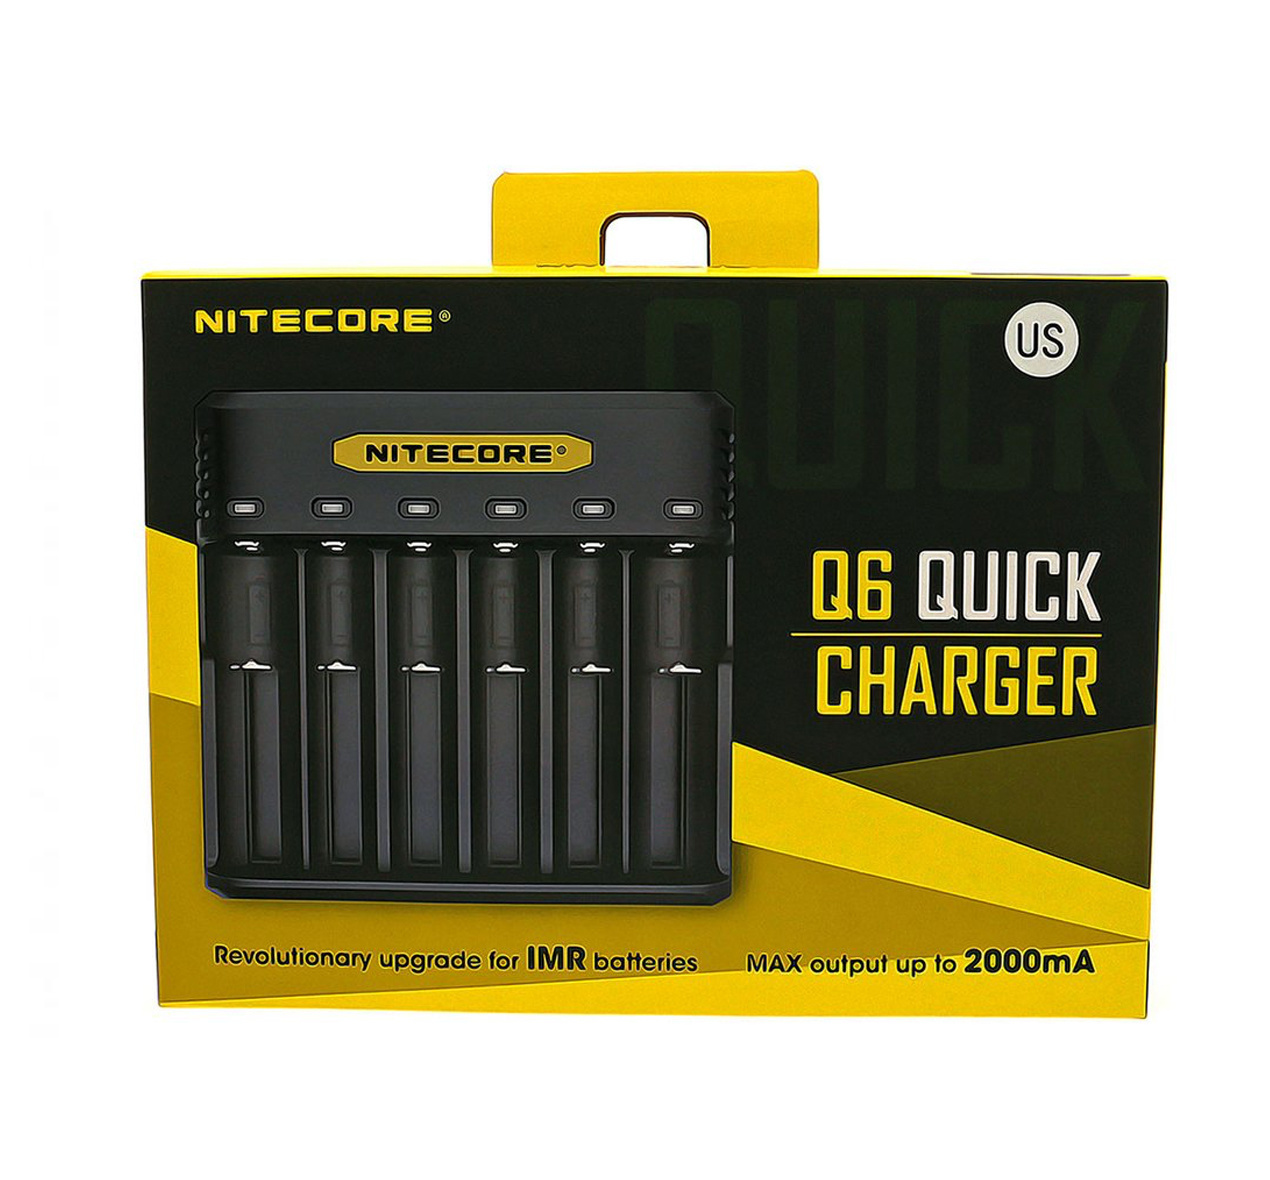 Nitecore Q6 charger